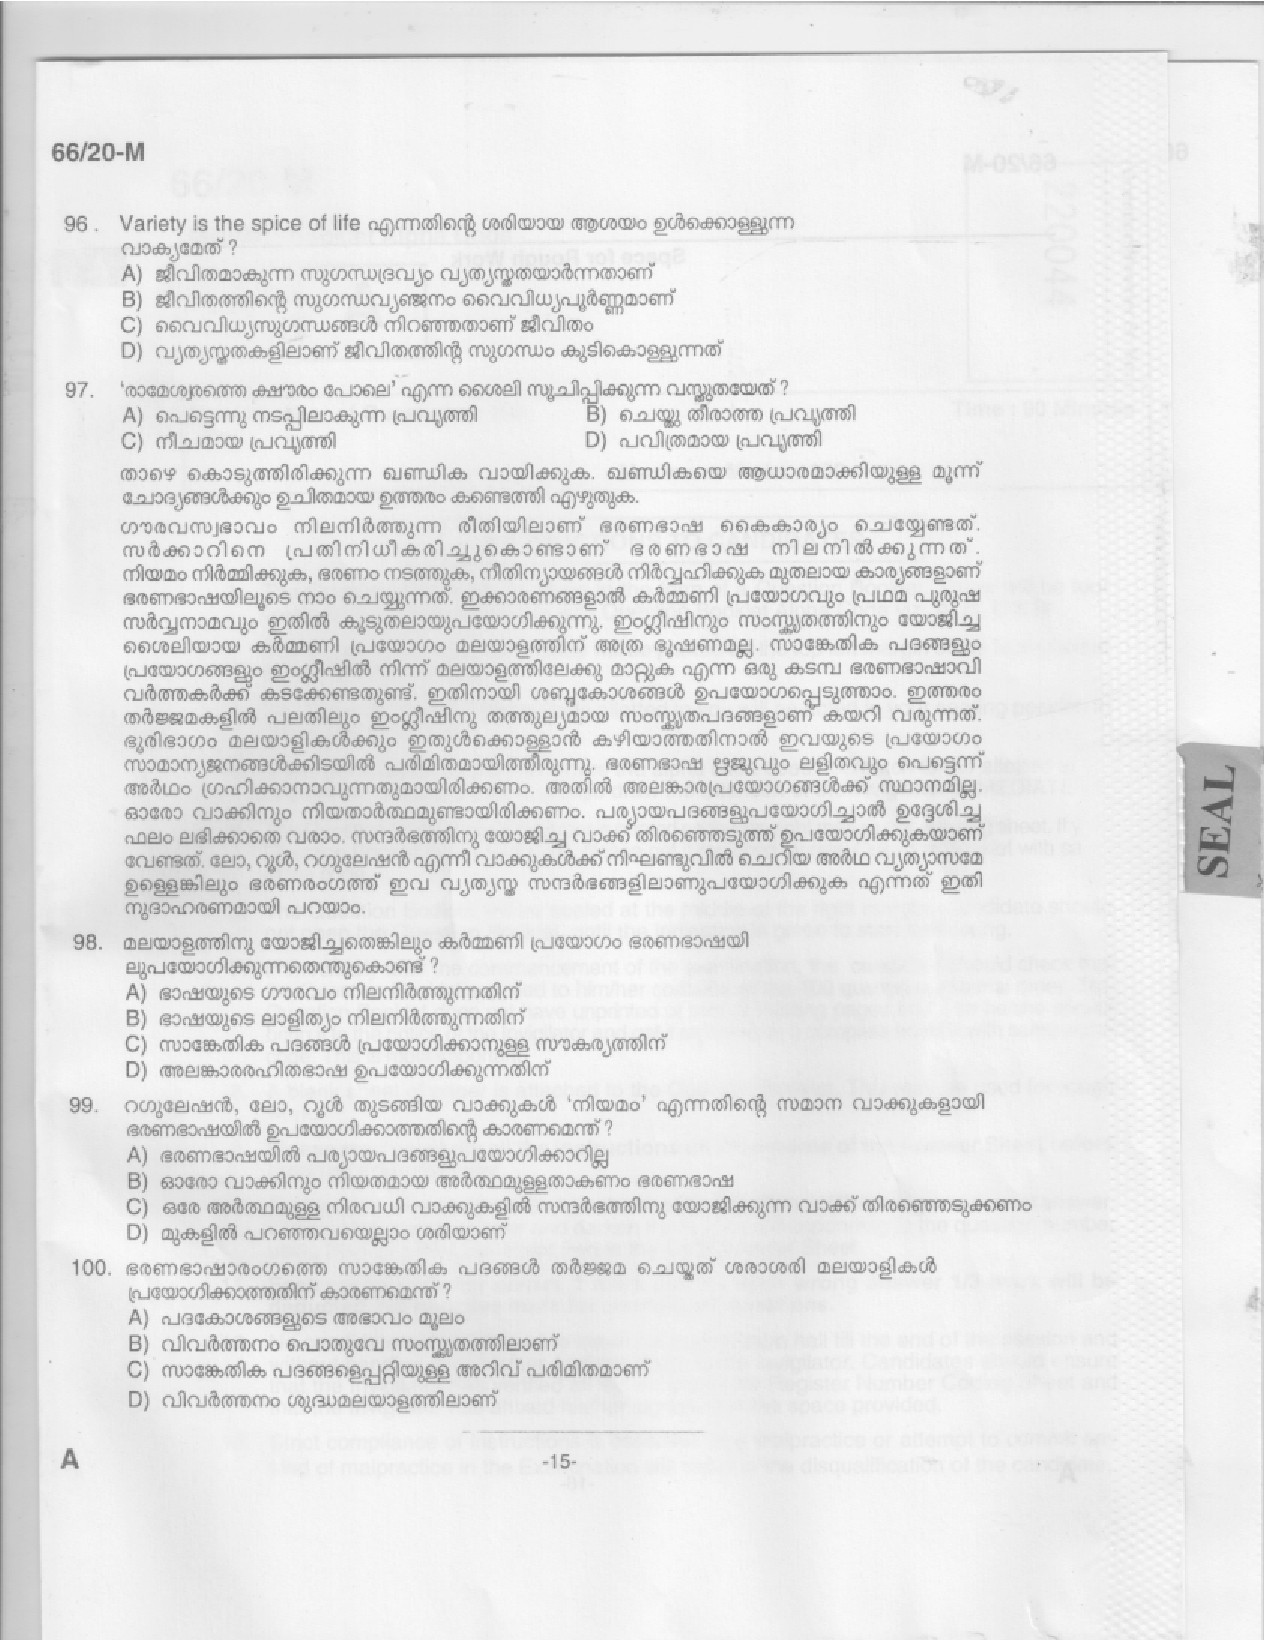 KAS Officer Paper II Malayalam Exam 2020 Code 662020 M 14